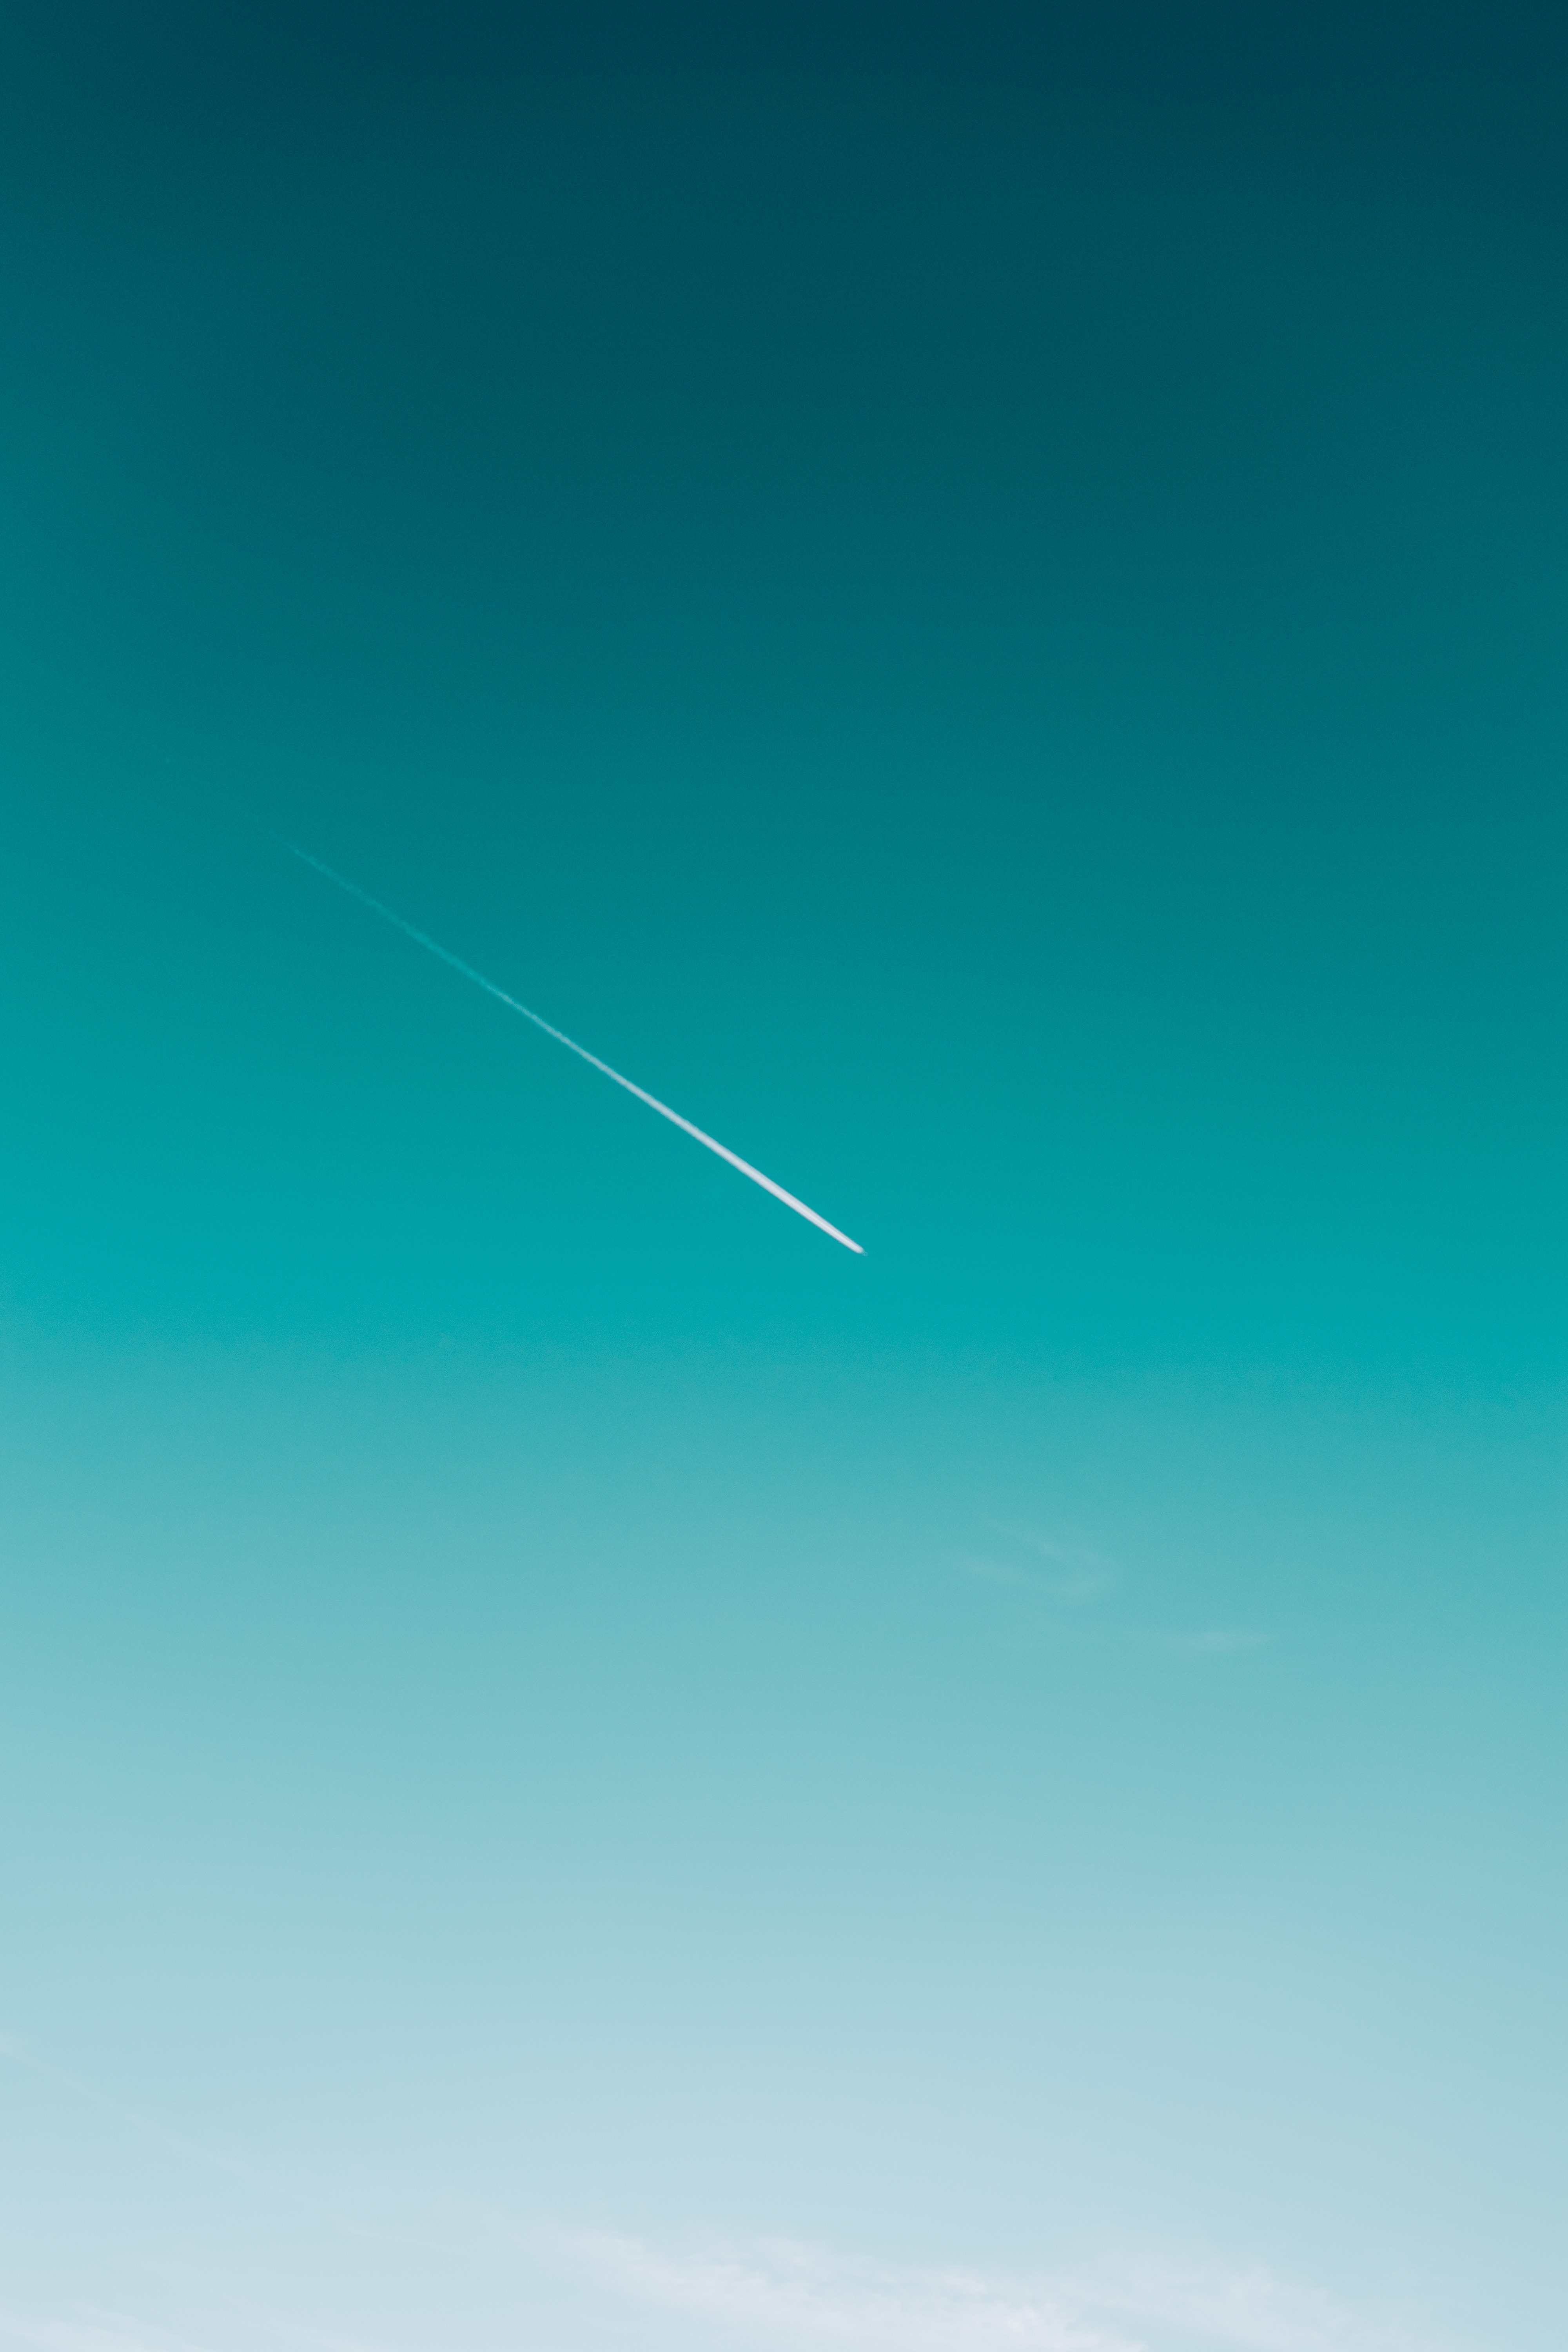 minimalism, airplane, track, trace, sky, plane